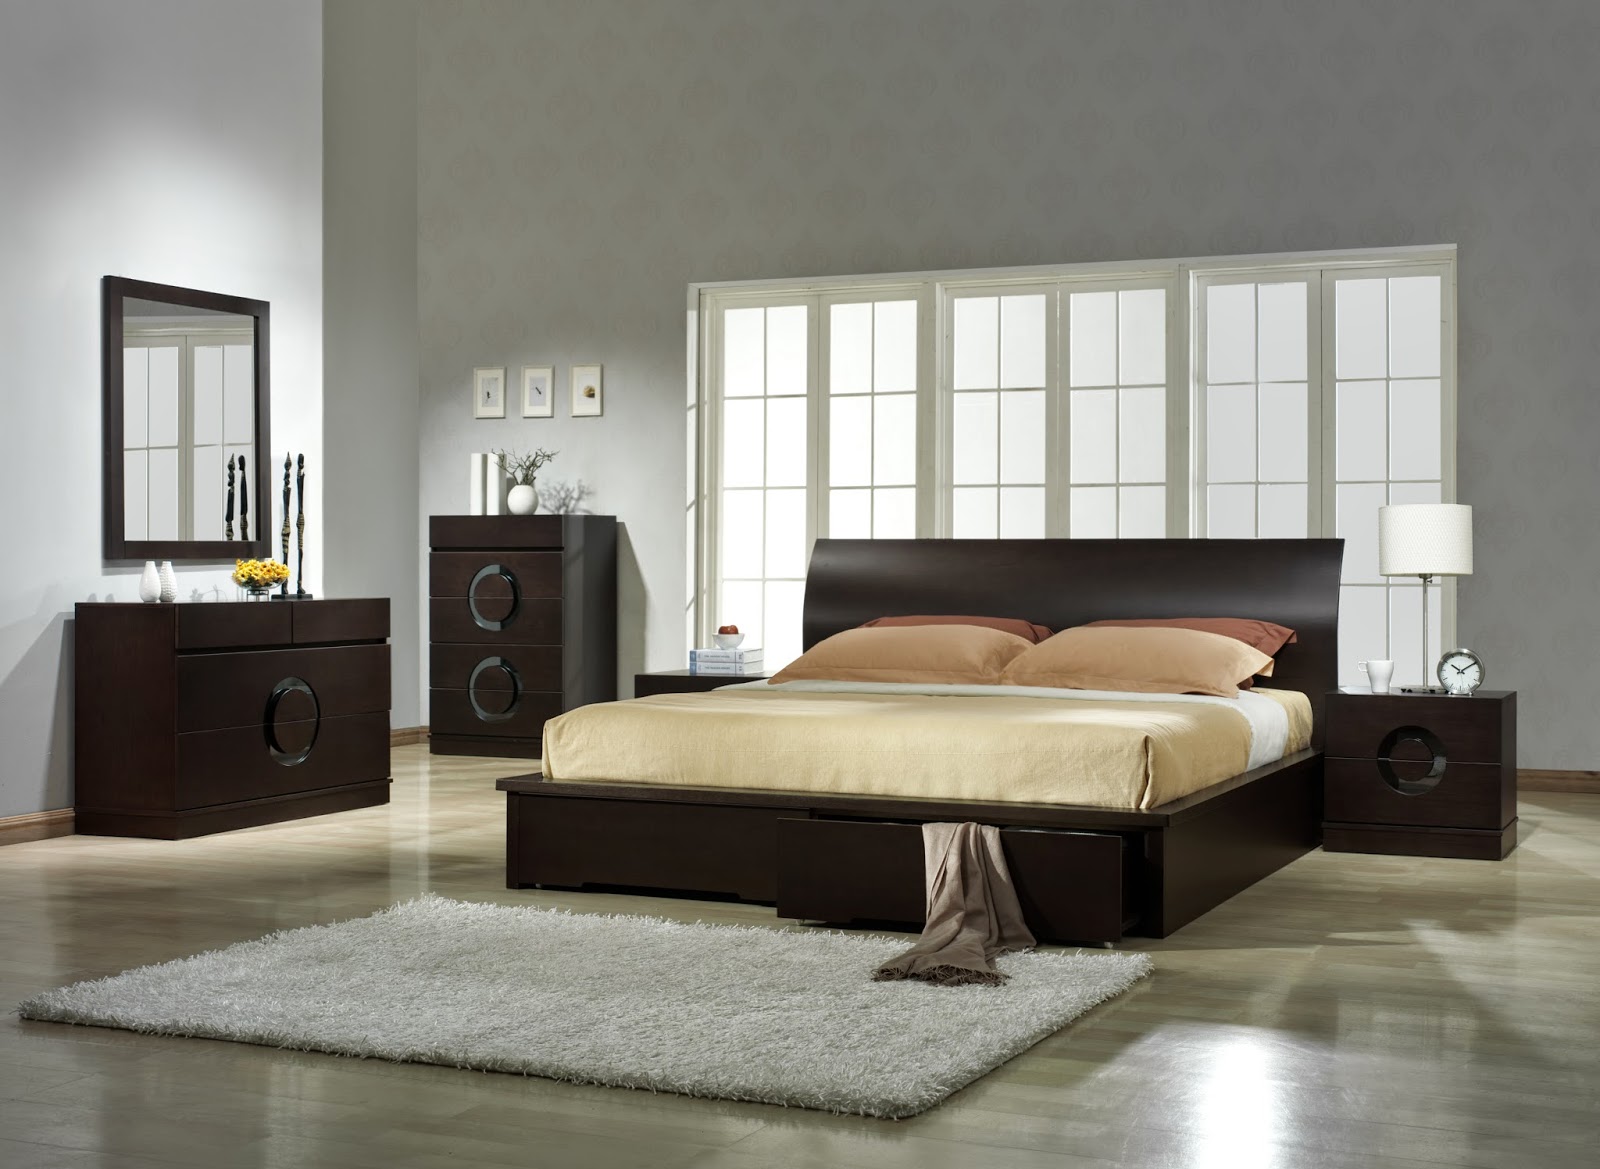 Cheap Bedroom Furniture | New Bathroom Designs